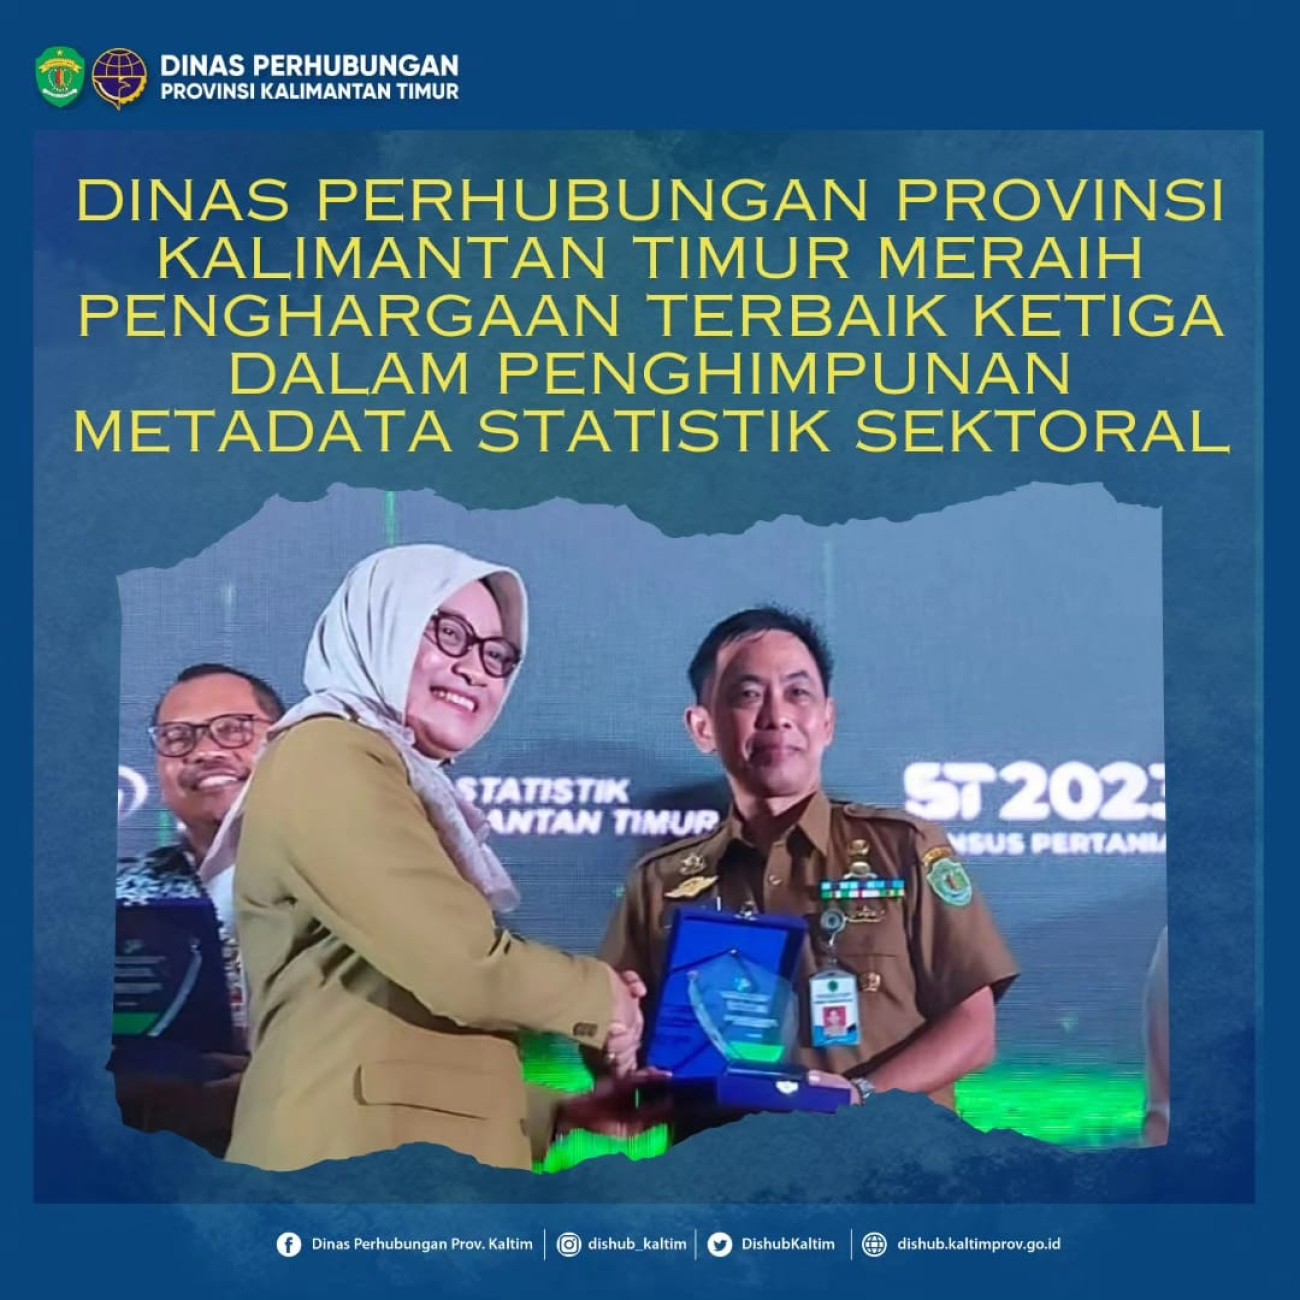 Dinas Perhubungan Provinsi Kalimantan Timur meraih penghargaan terbaik ketiga dalam penghimpunan metadata statistik sektoral yang diadakan oleh Badan Pusat Statistik (BPS) Provinsi Kalimantan Timur